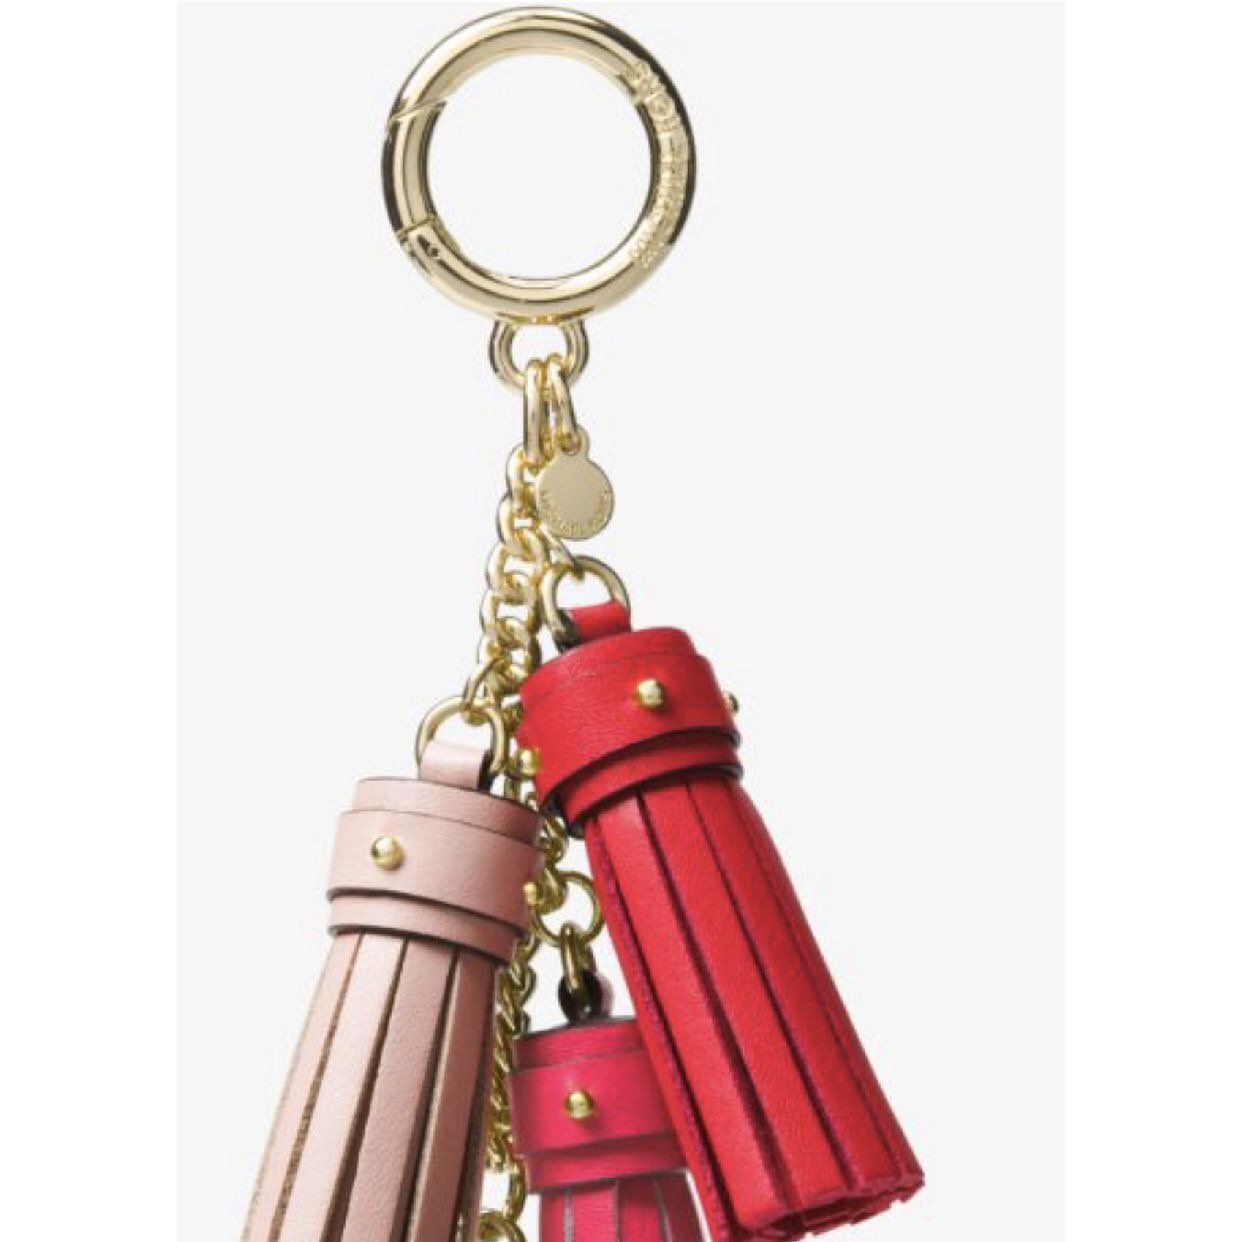 New Michael kors golden lock keychain or bag charm